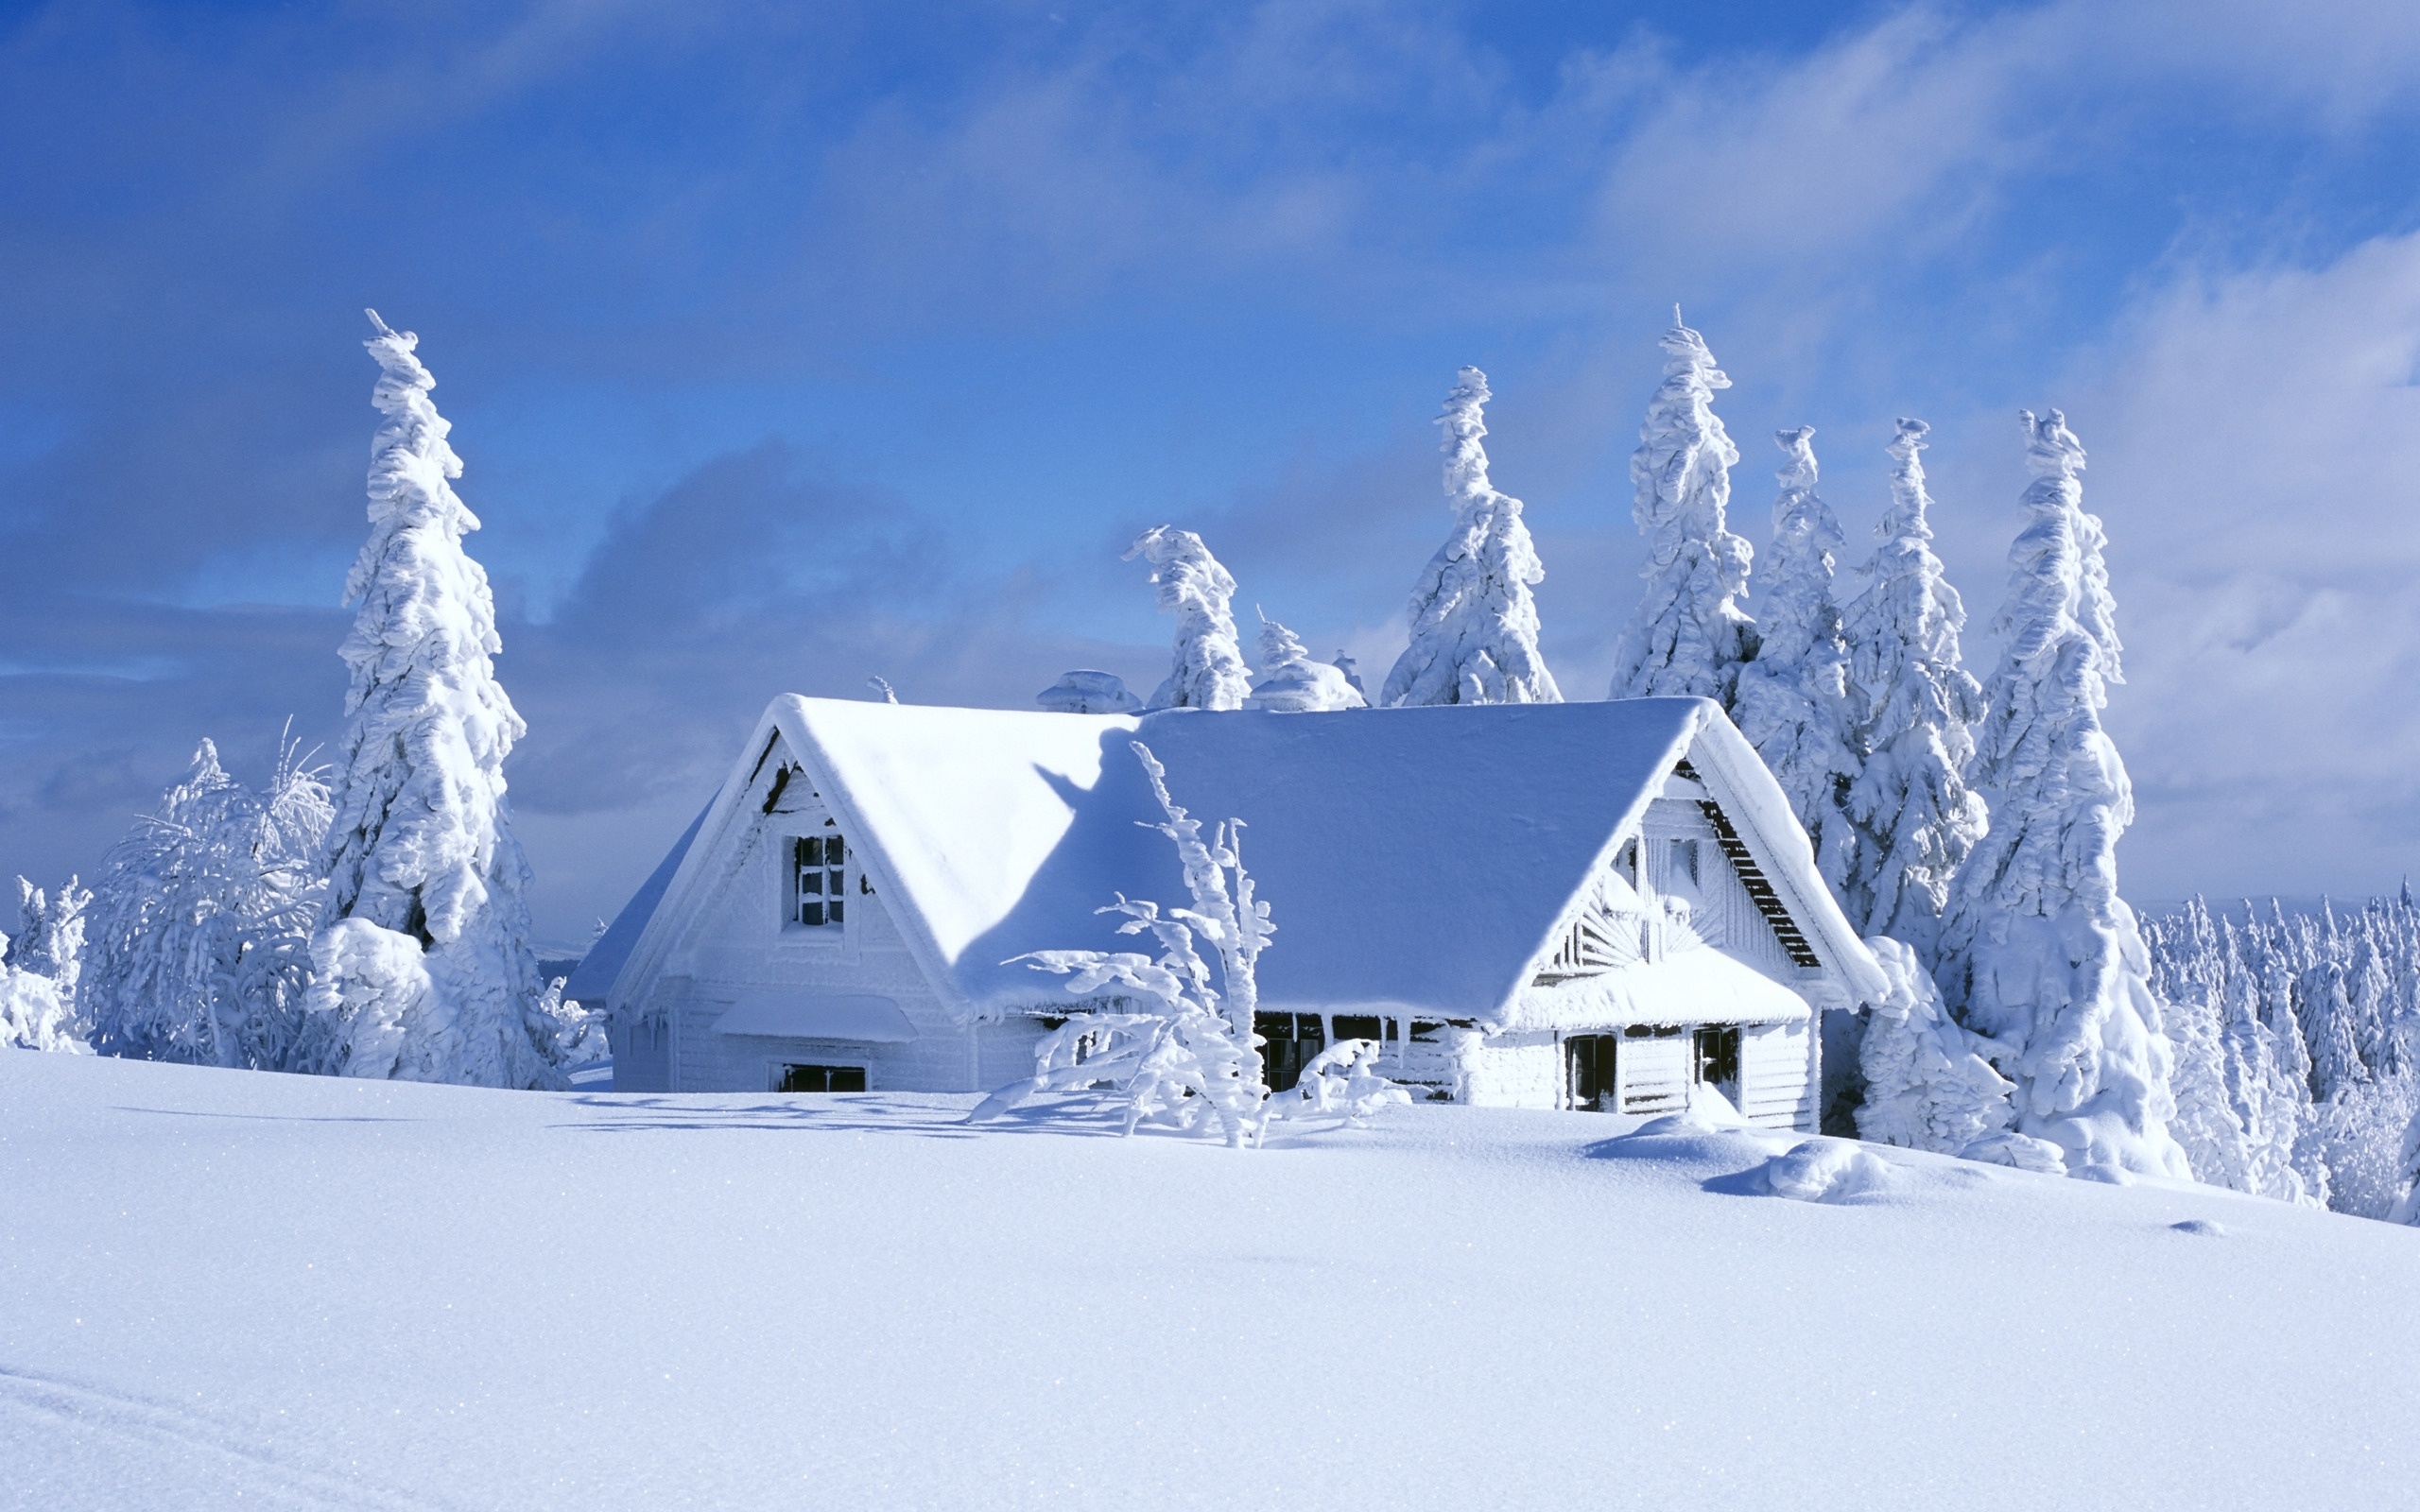 House-Covered-In-Snow-desktop-high-resolution-wallpaper-images-desktop-background-full-free